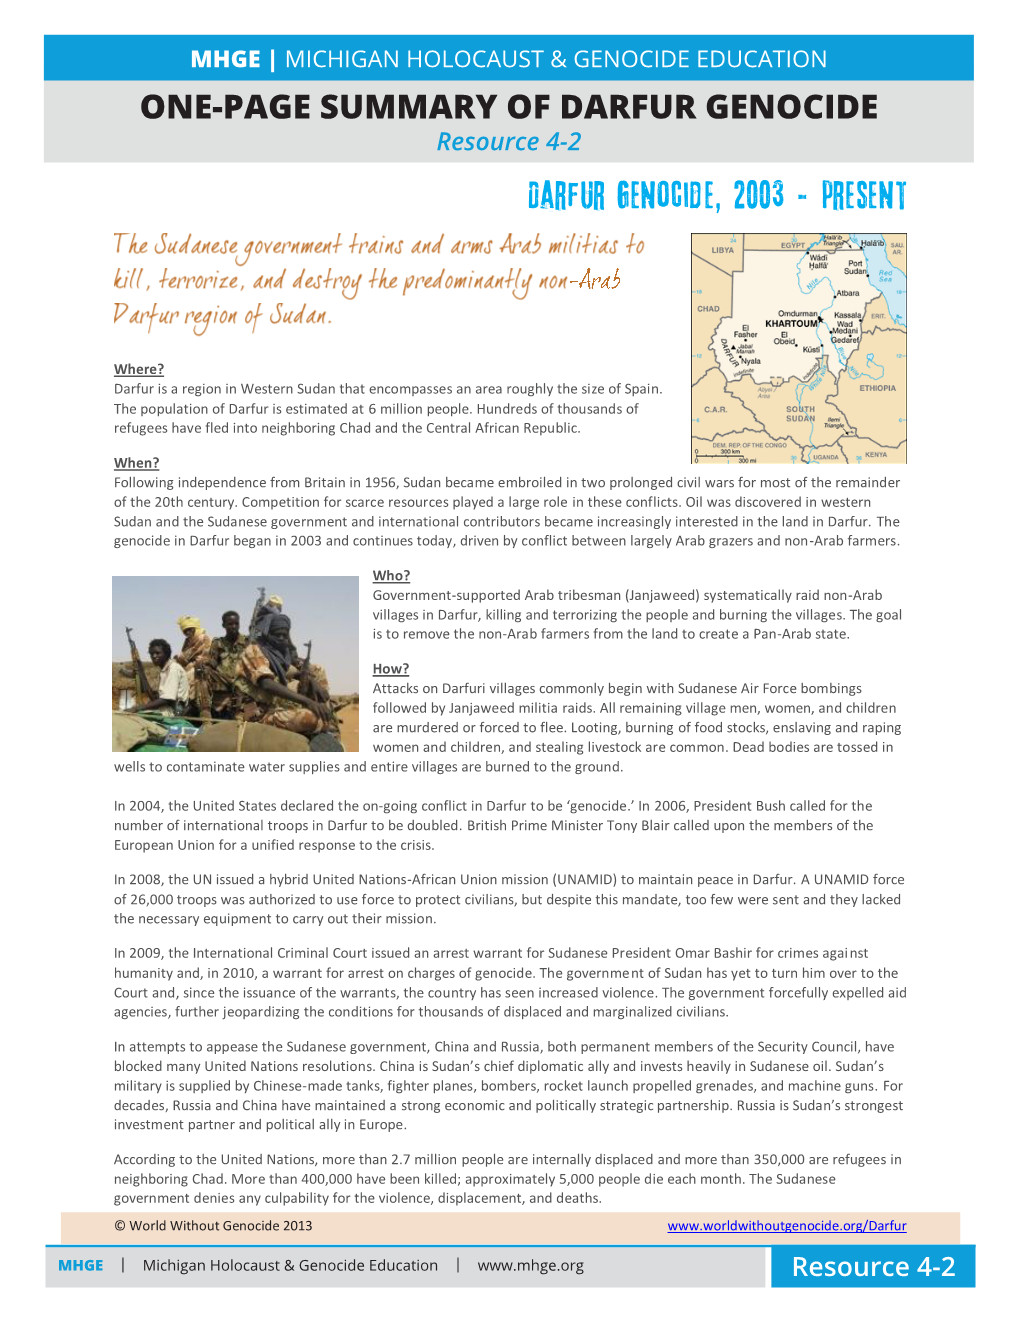 Darfur Genocide, 2003 - Present